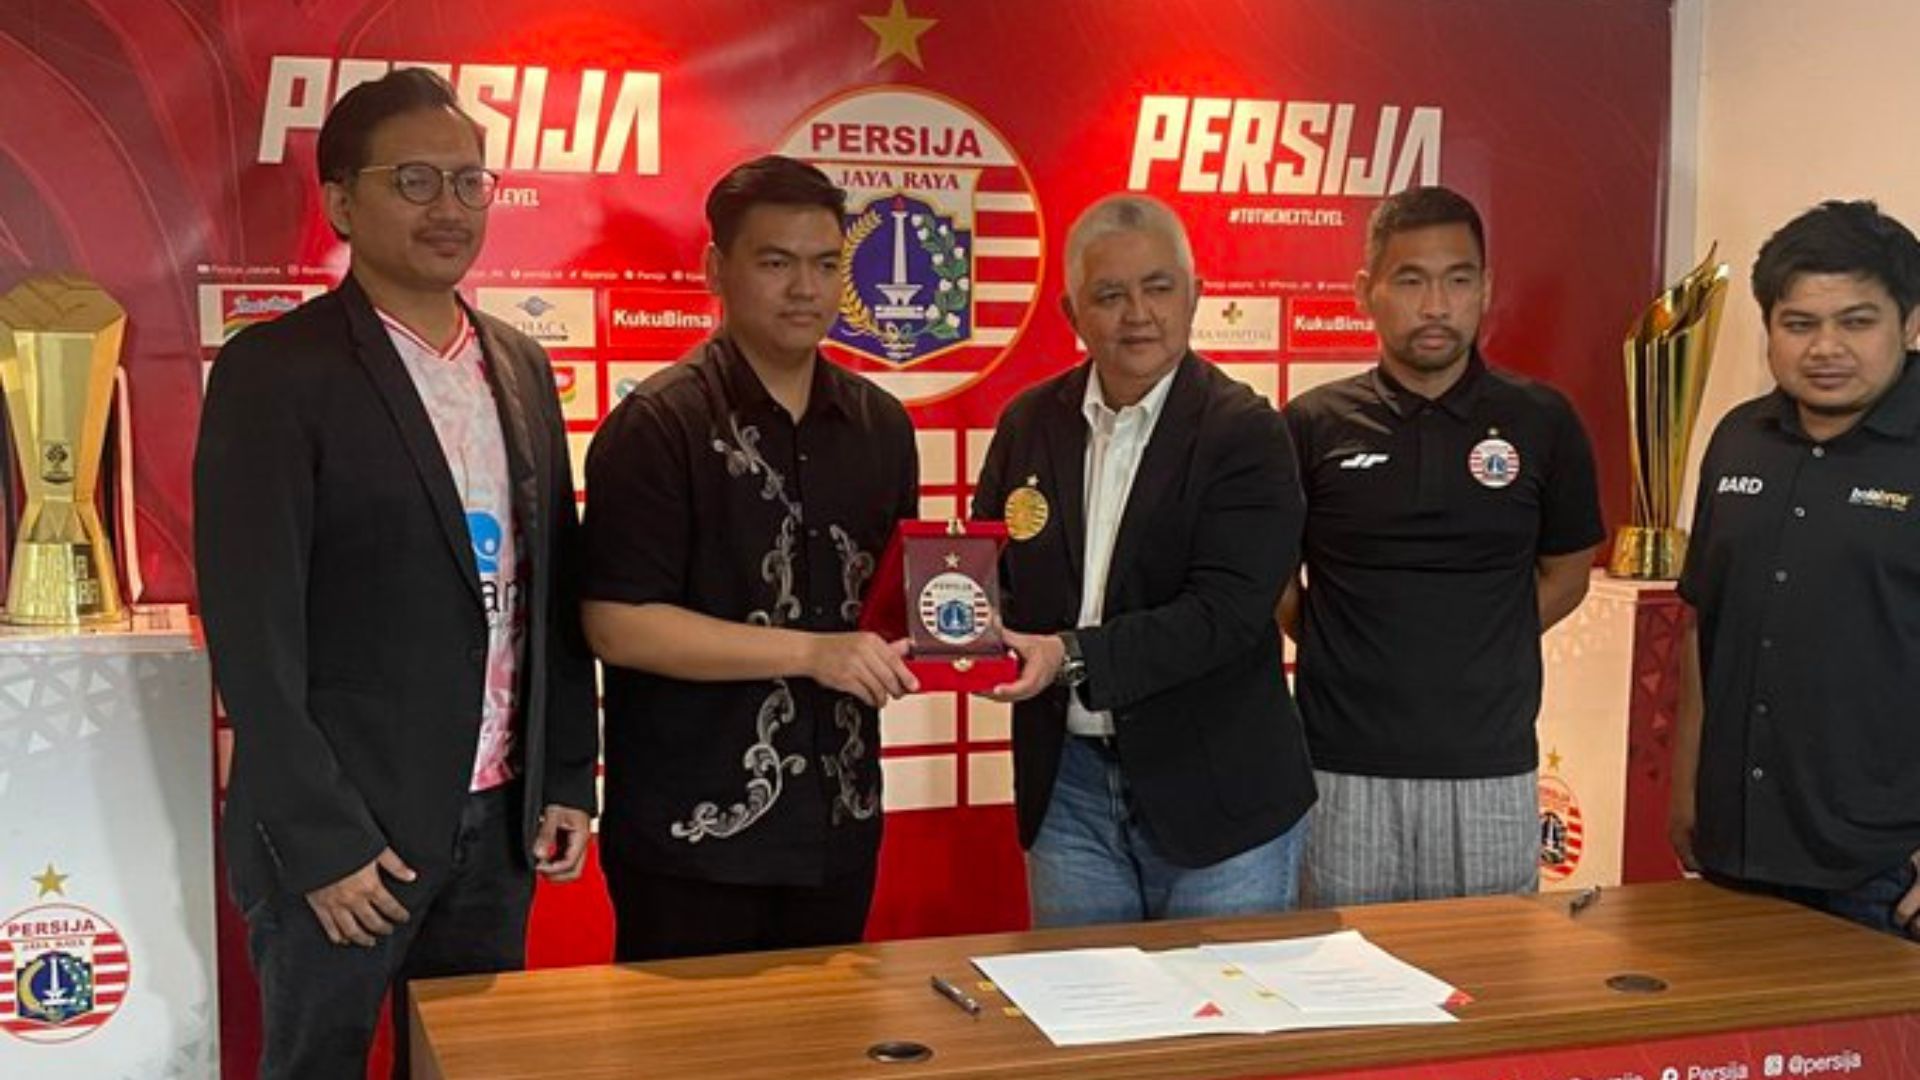 KL City Persija KL City & Persija Jakarta Umum Kerjasama Strategik